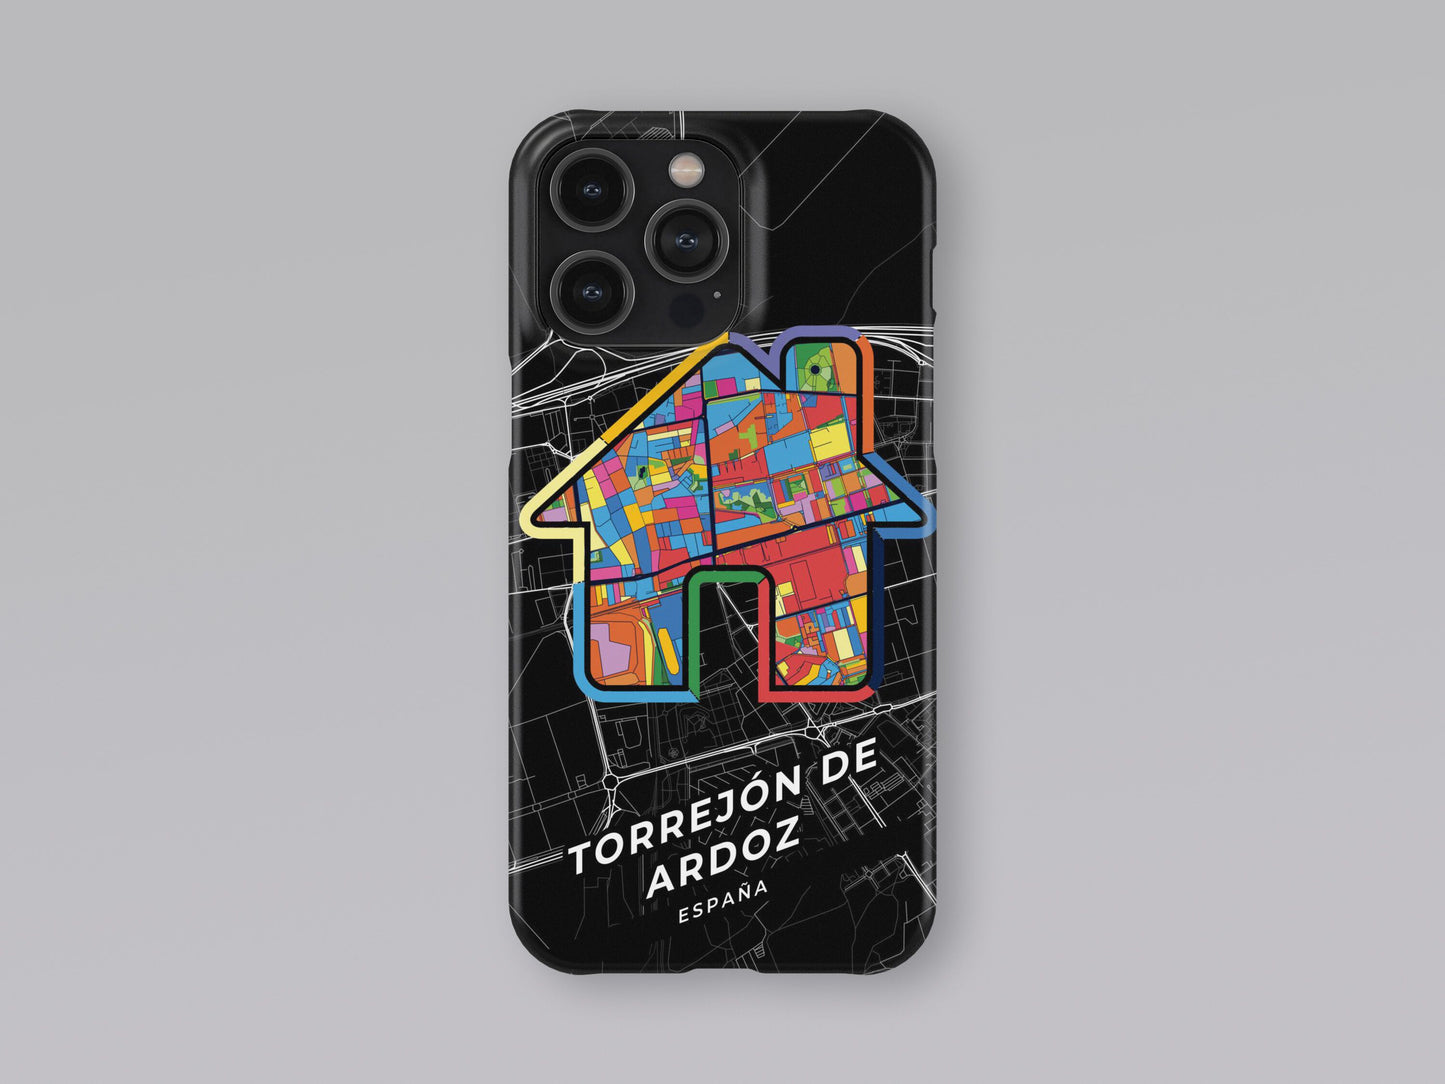 Torrejón De Ardoz Spain slim phone case with colorful icon 3